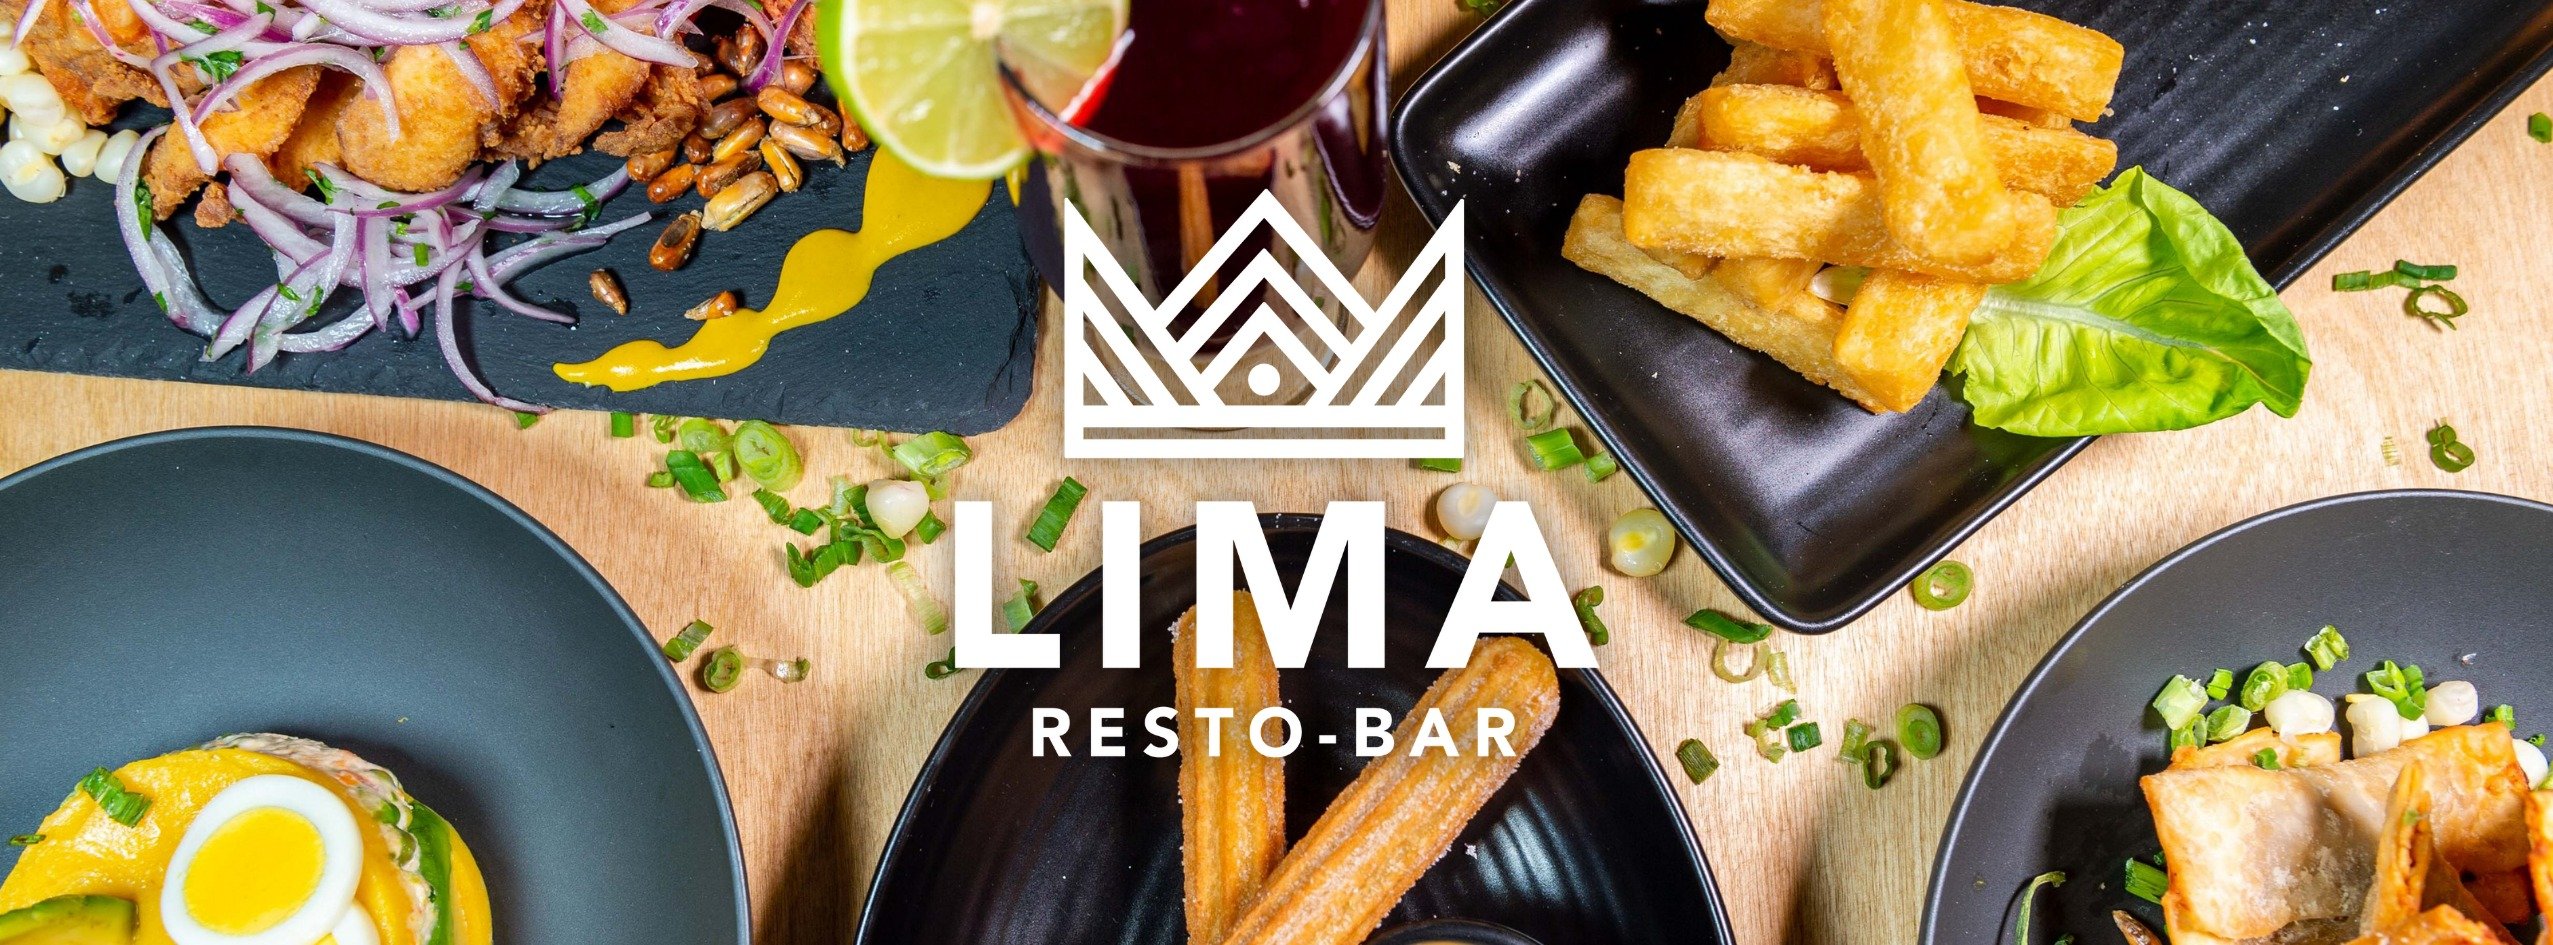 Resto-Bar LIMA - Cuisine Péruvienne